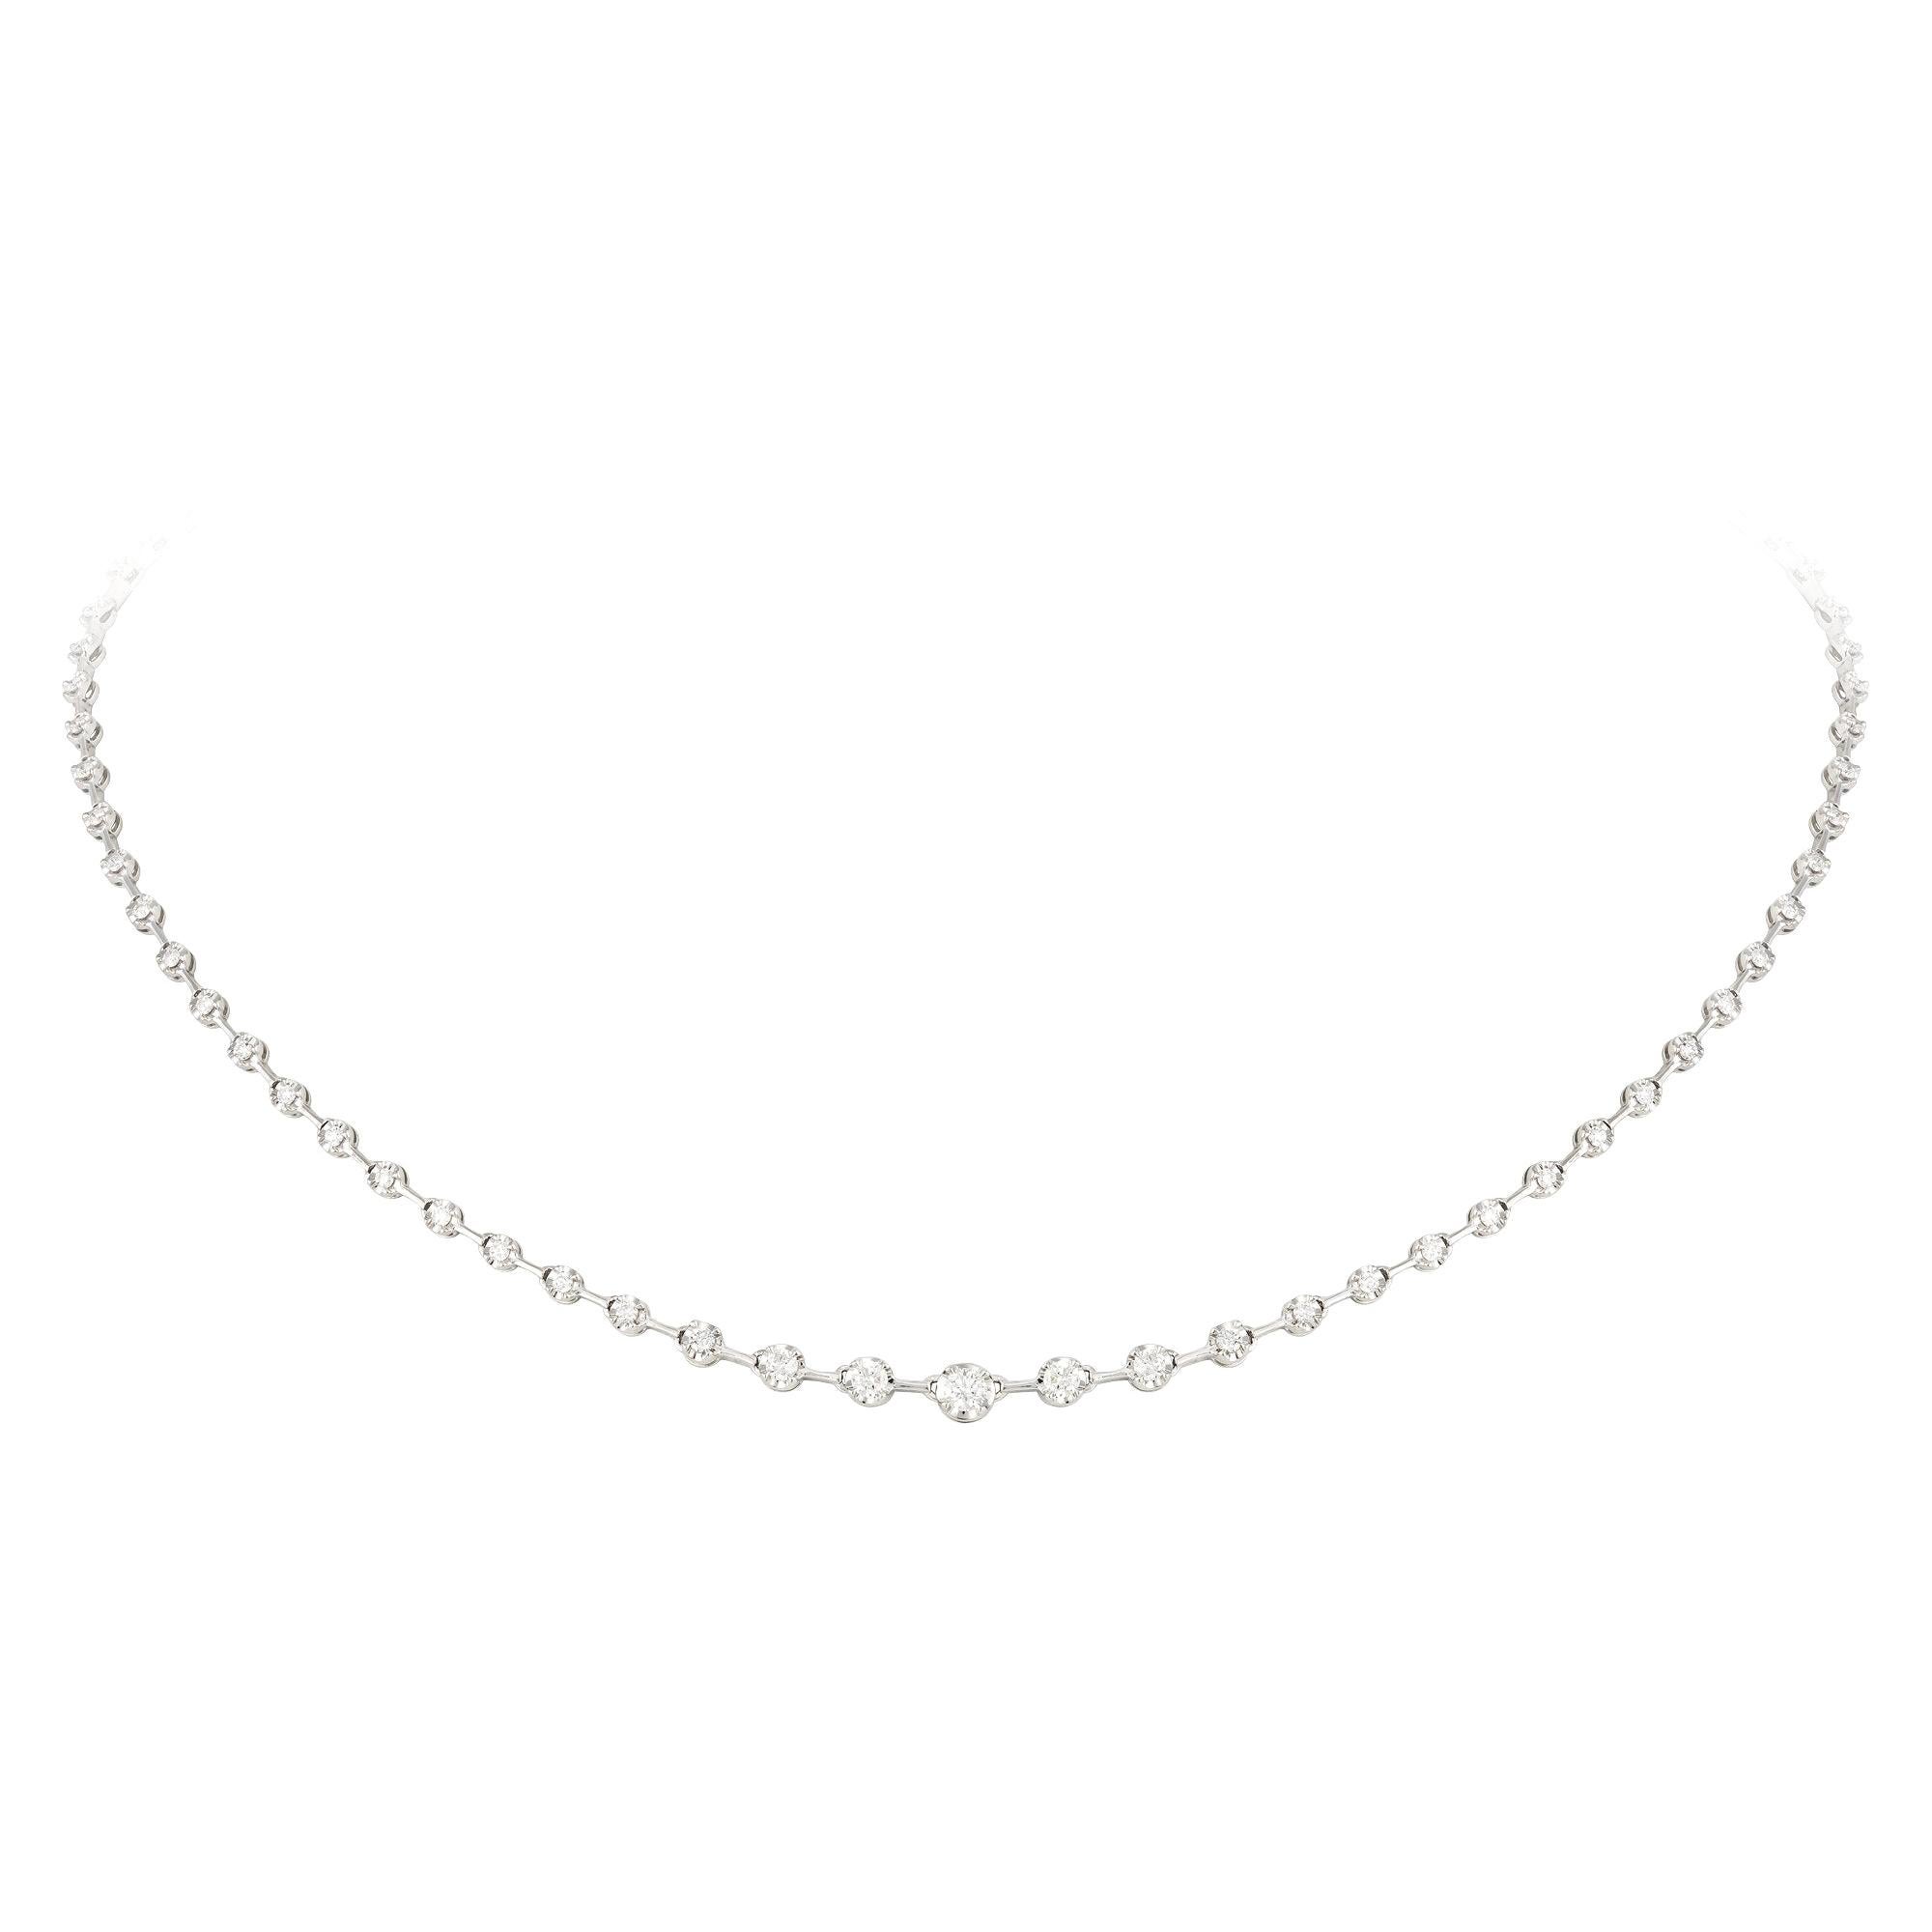 Best Seller Graduation Style Diamond Necklace 18k White Gold for Her